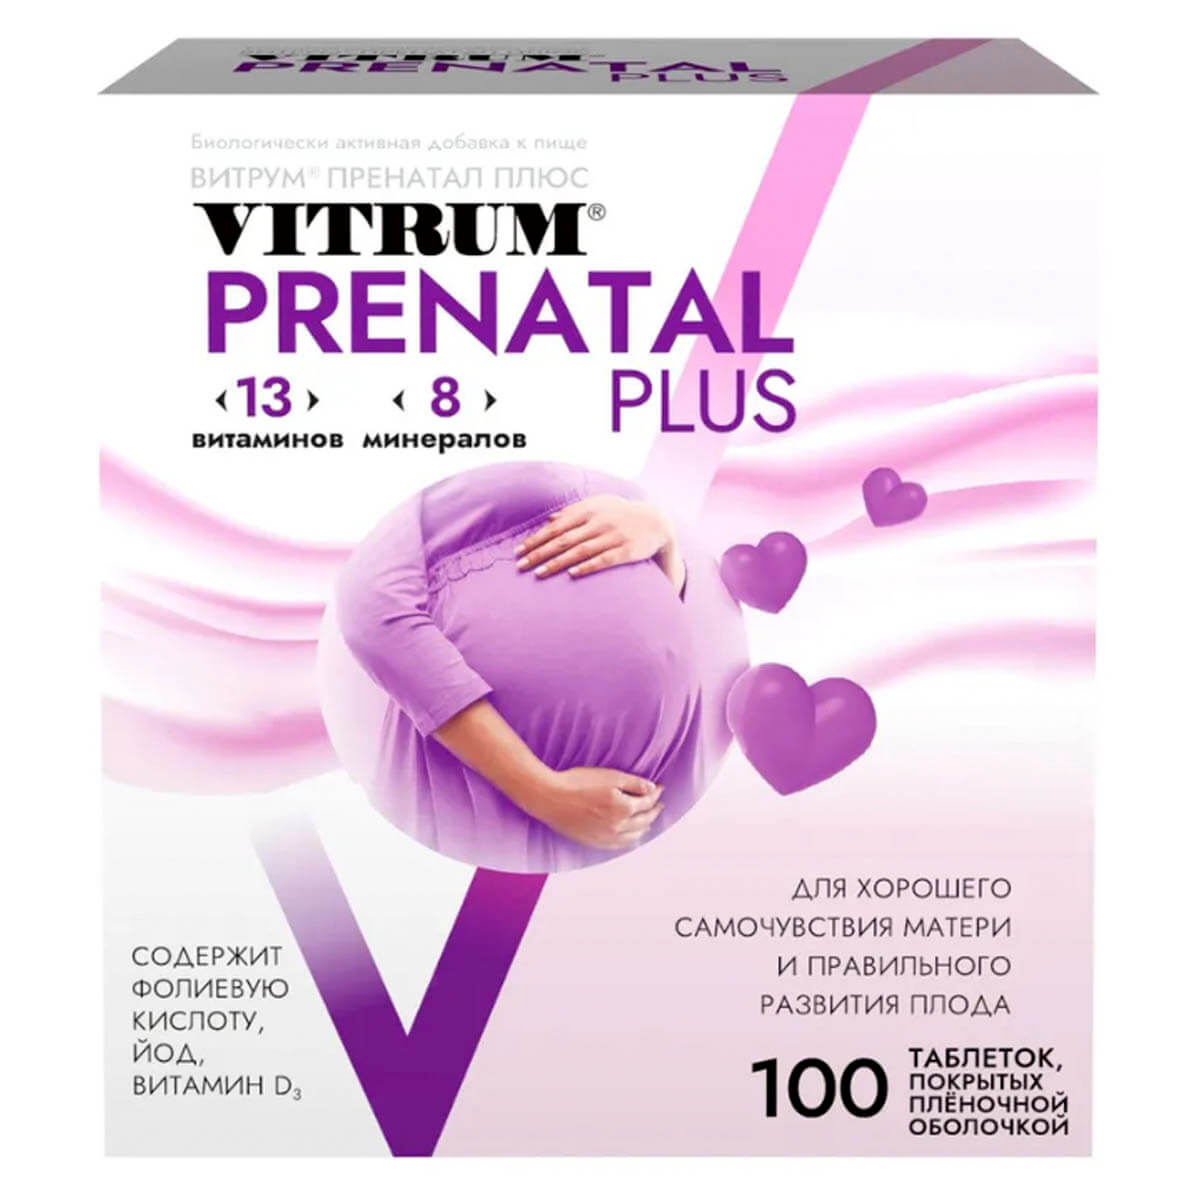 Купить Витамины Prenatal Plus для матери и ребенка, 100 таблеток, Vitrum, Витрум